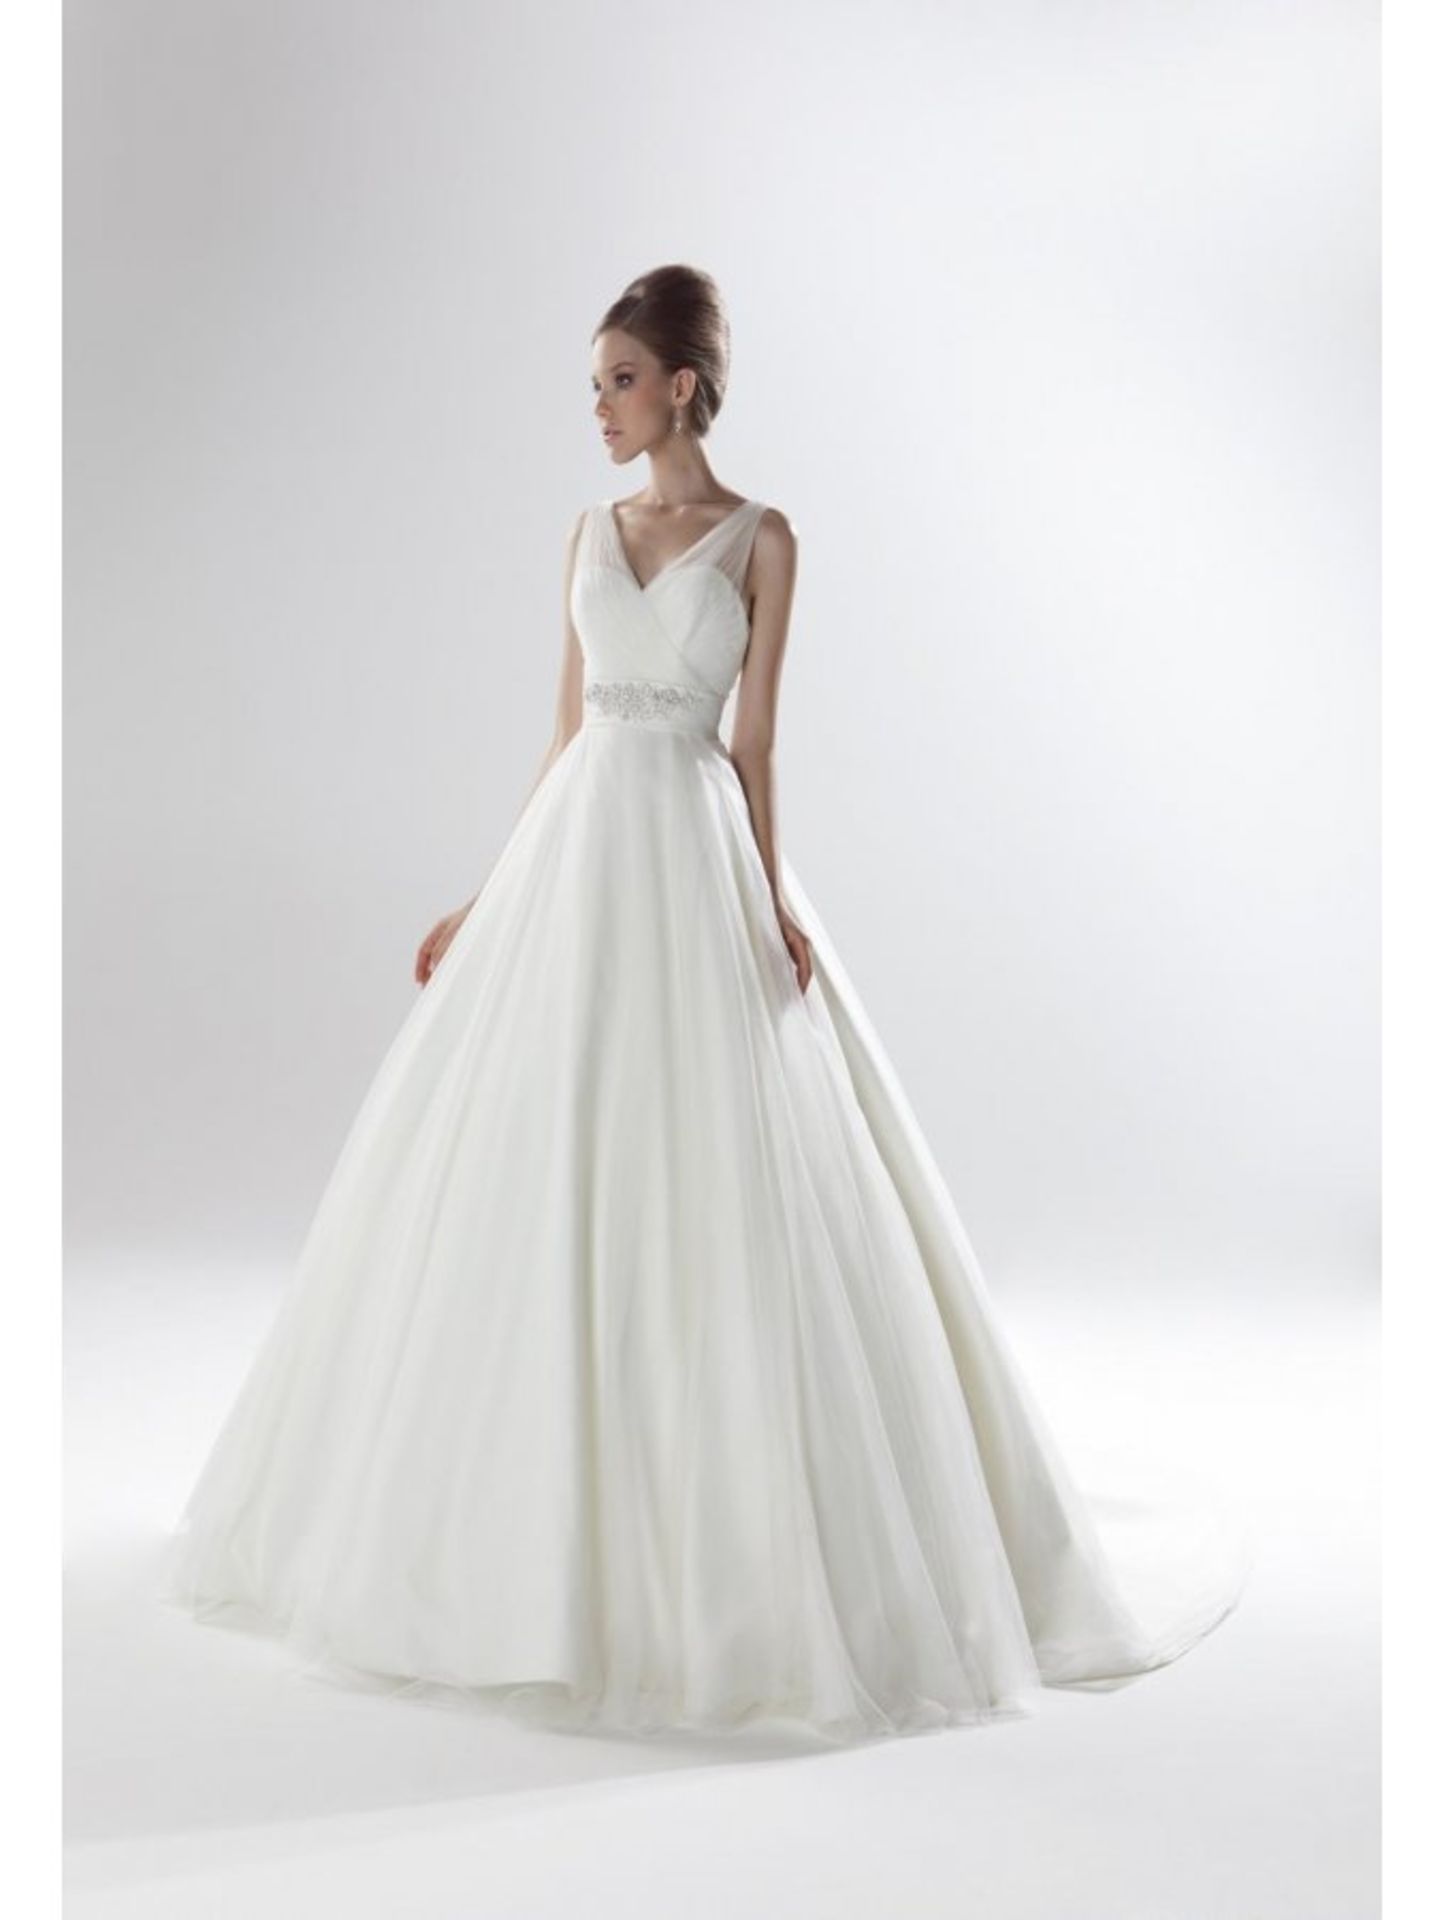 80 x Various Ex-Display Wedding Dresses - Brands inc: LadyBird, White Rose & Lillian West - Image 16 of 60